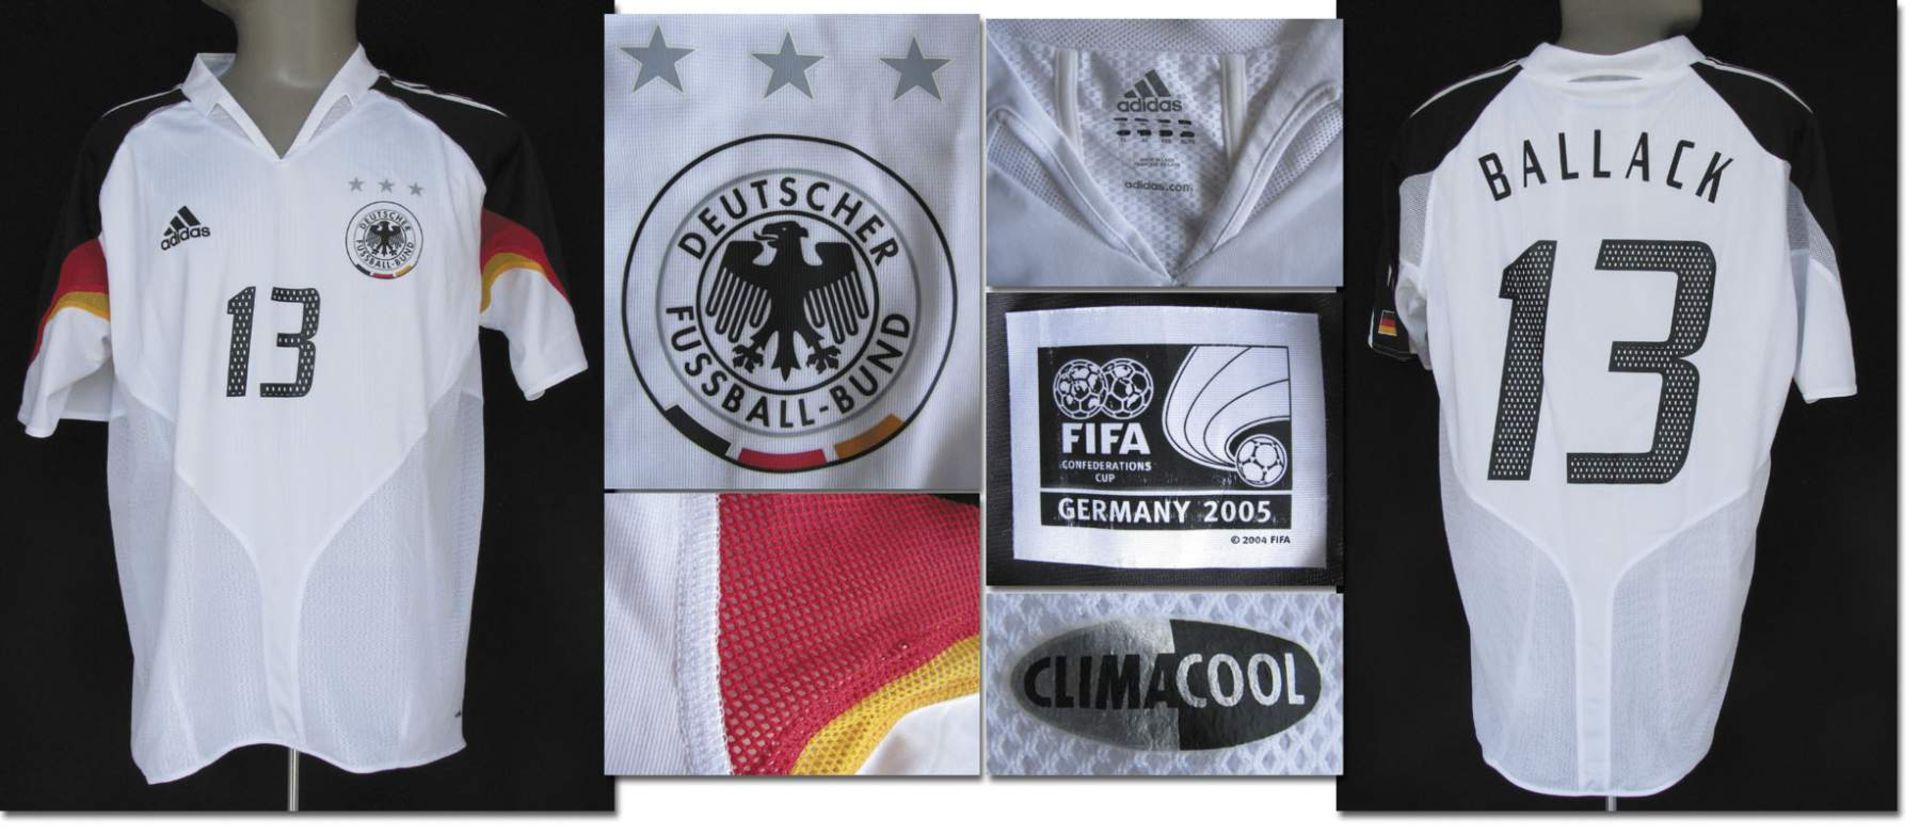 ConFed 2005 match worn football shirt Germany - Original match worn shirt Germany with number 13.